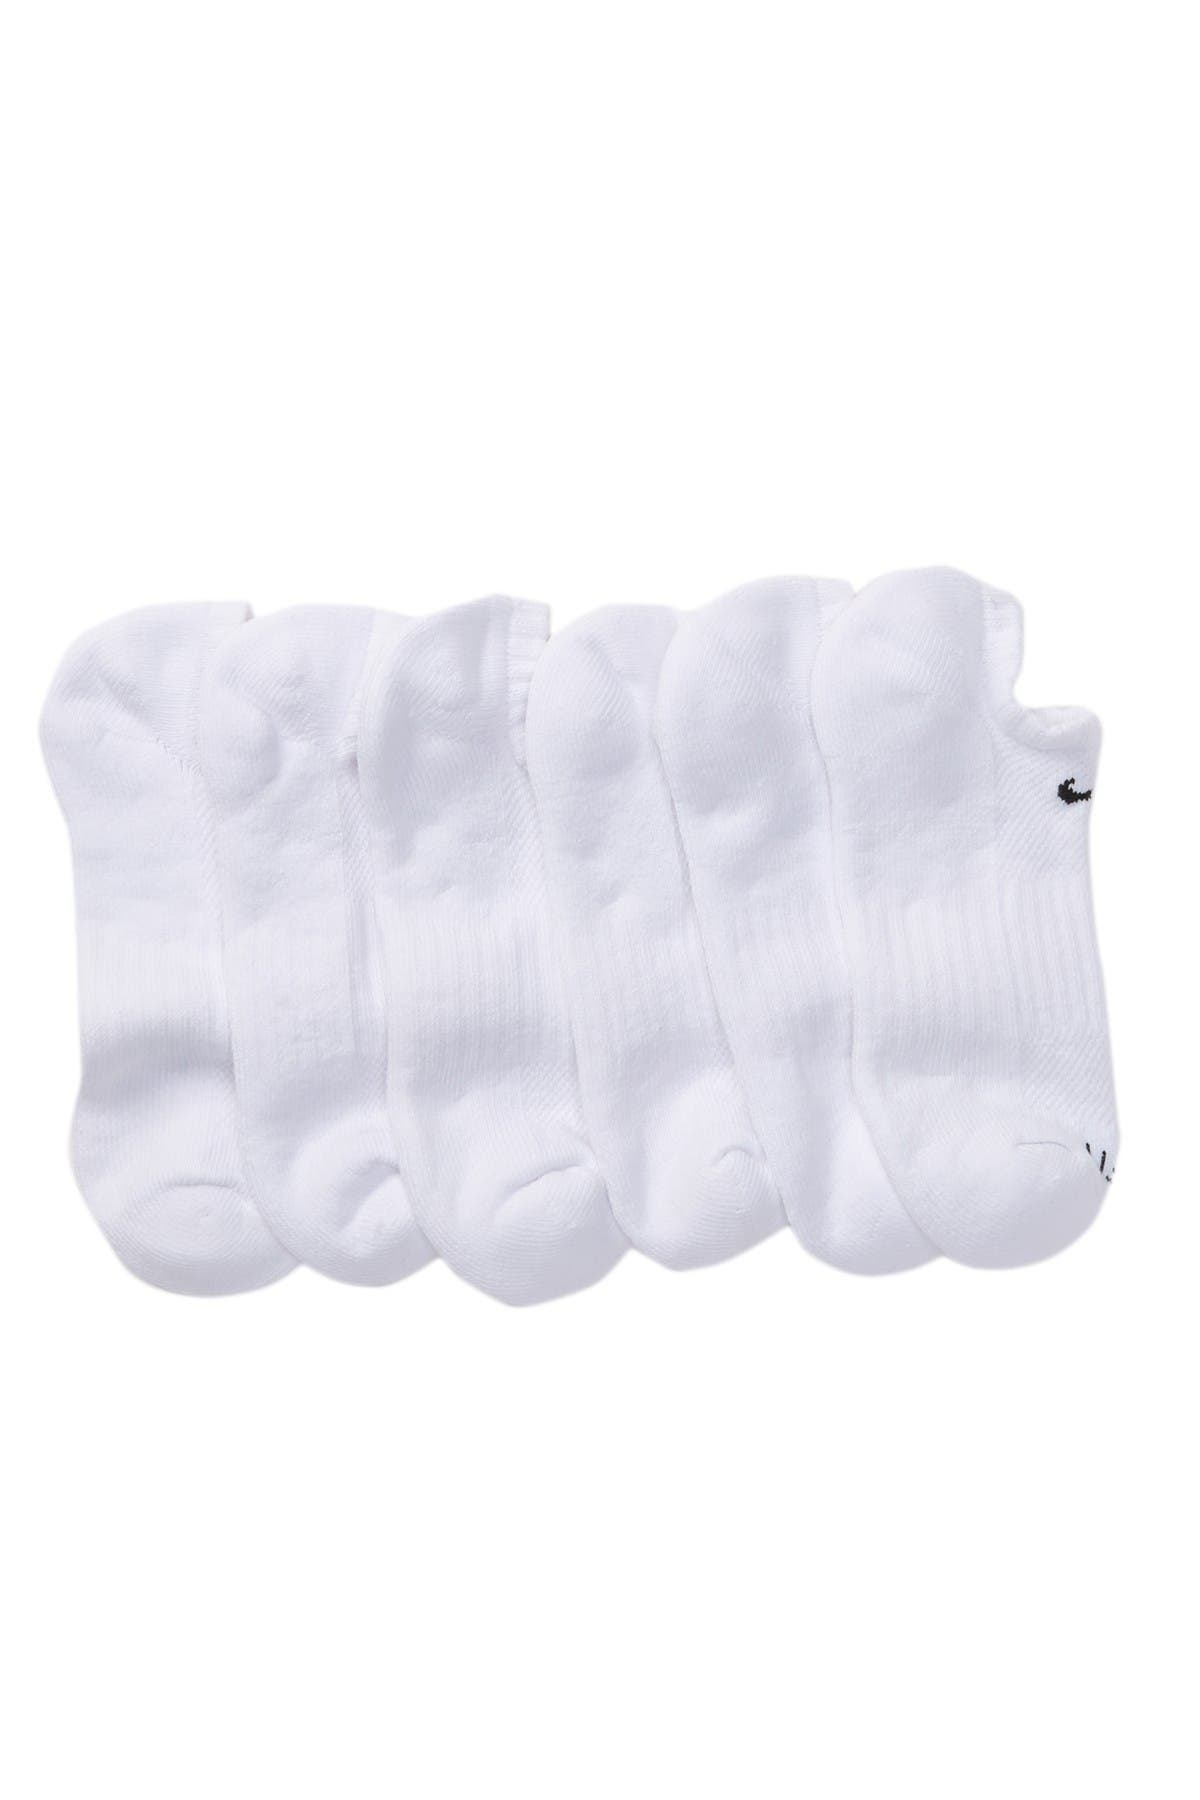 white low nike socks